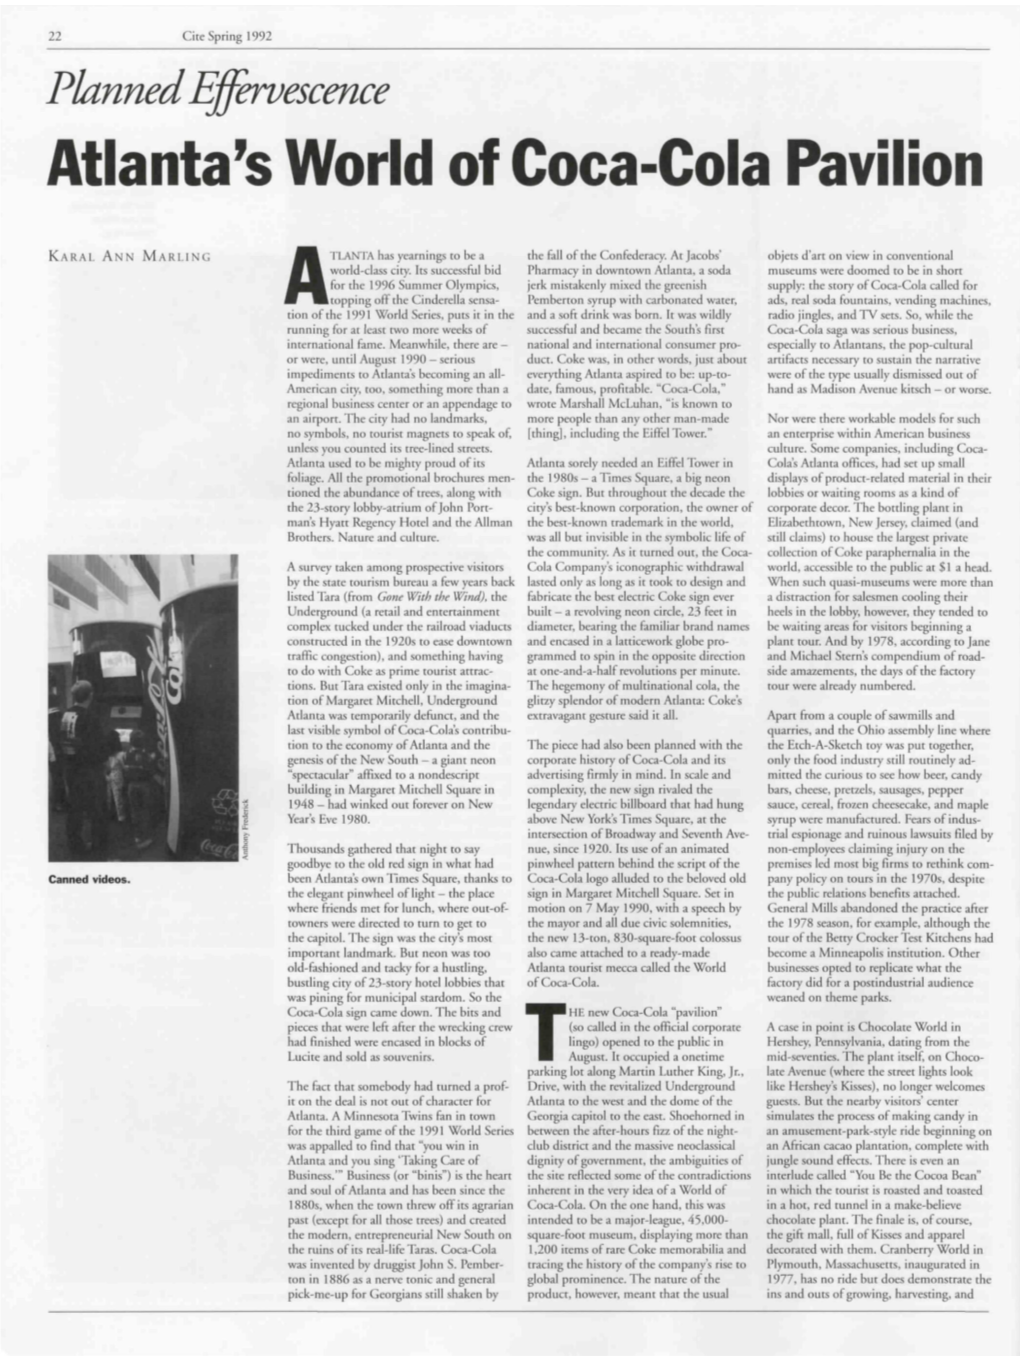 Planned Effervescence Atlanta's World of Coca-Cola Pavilion